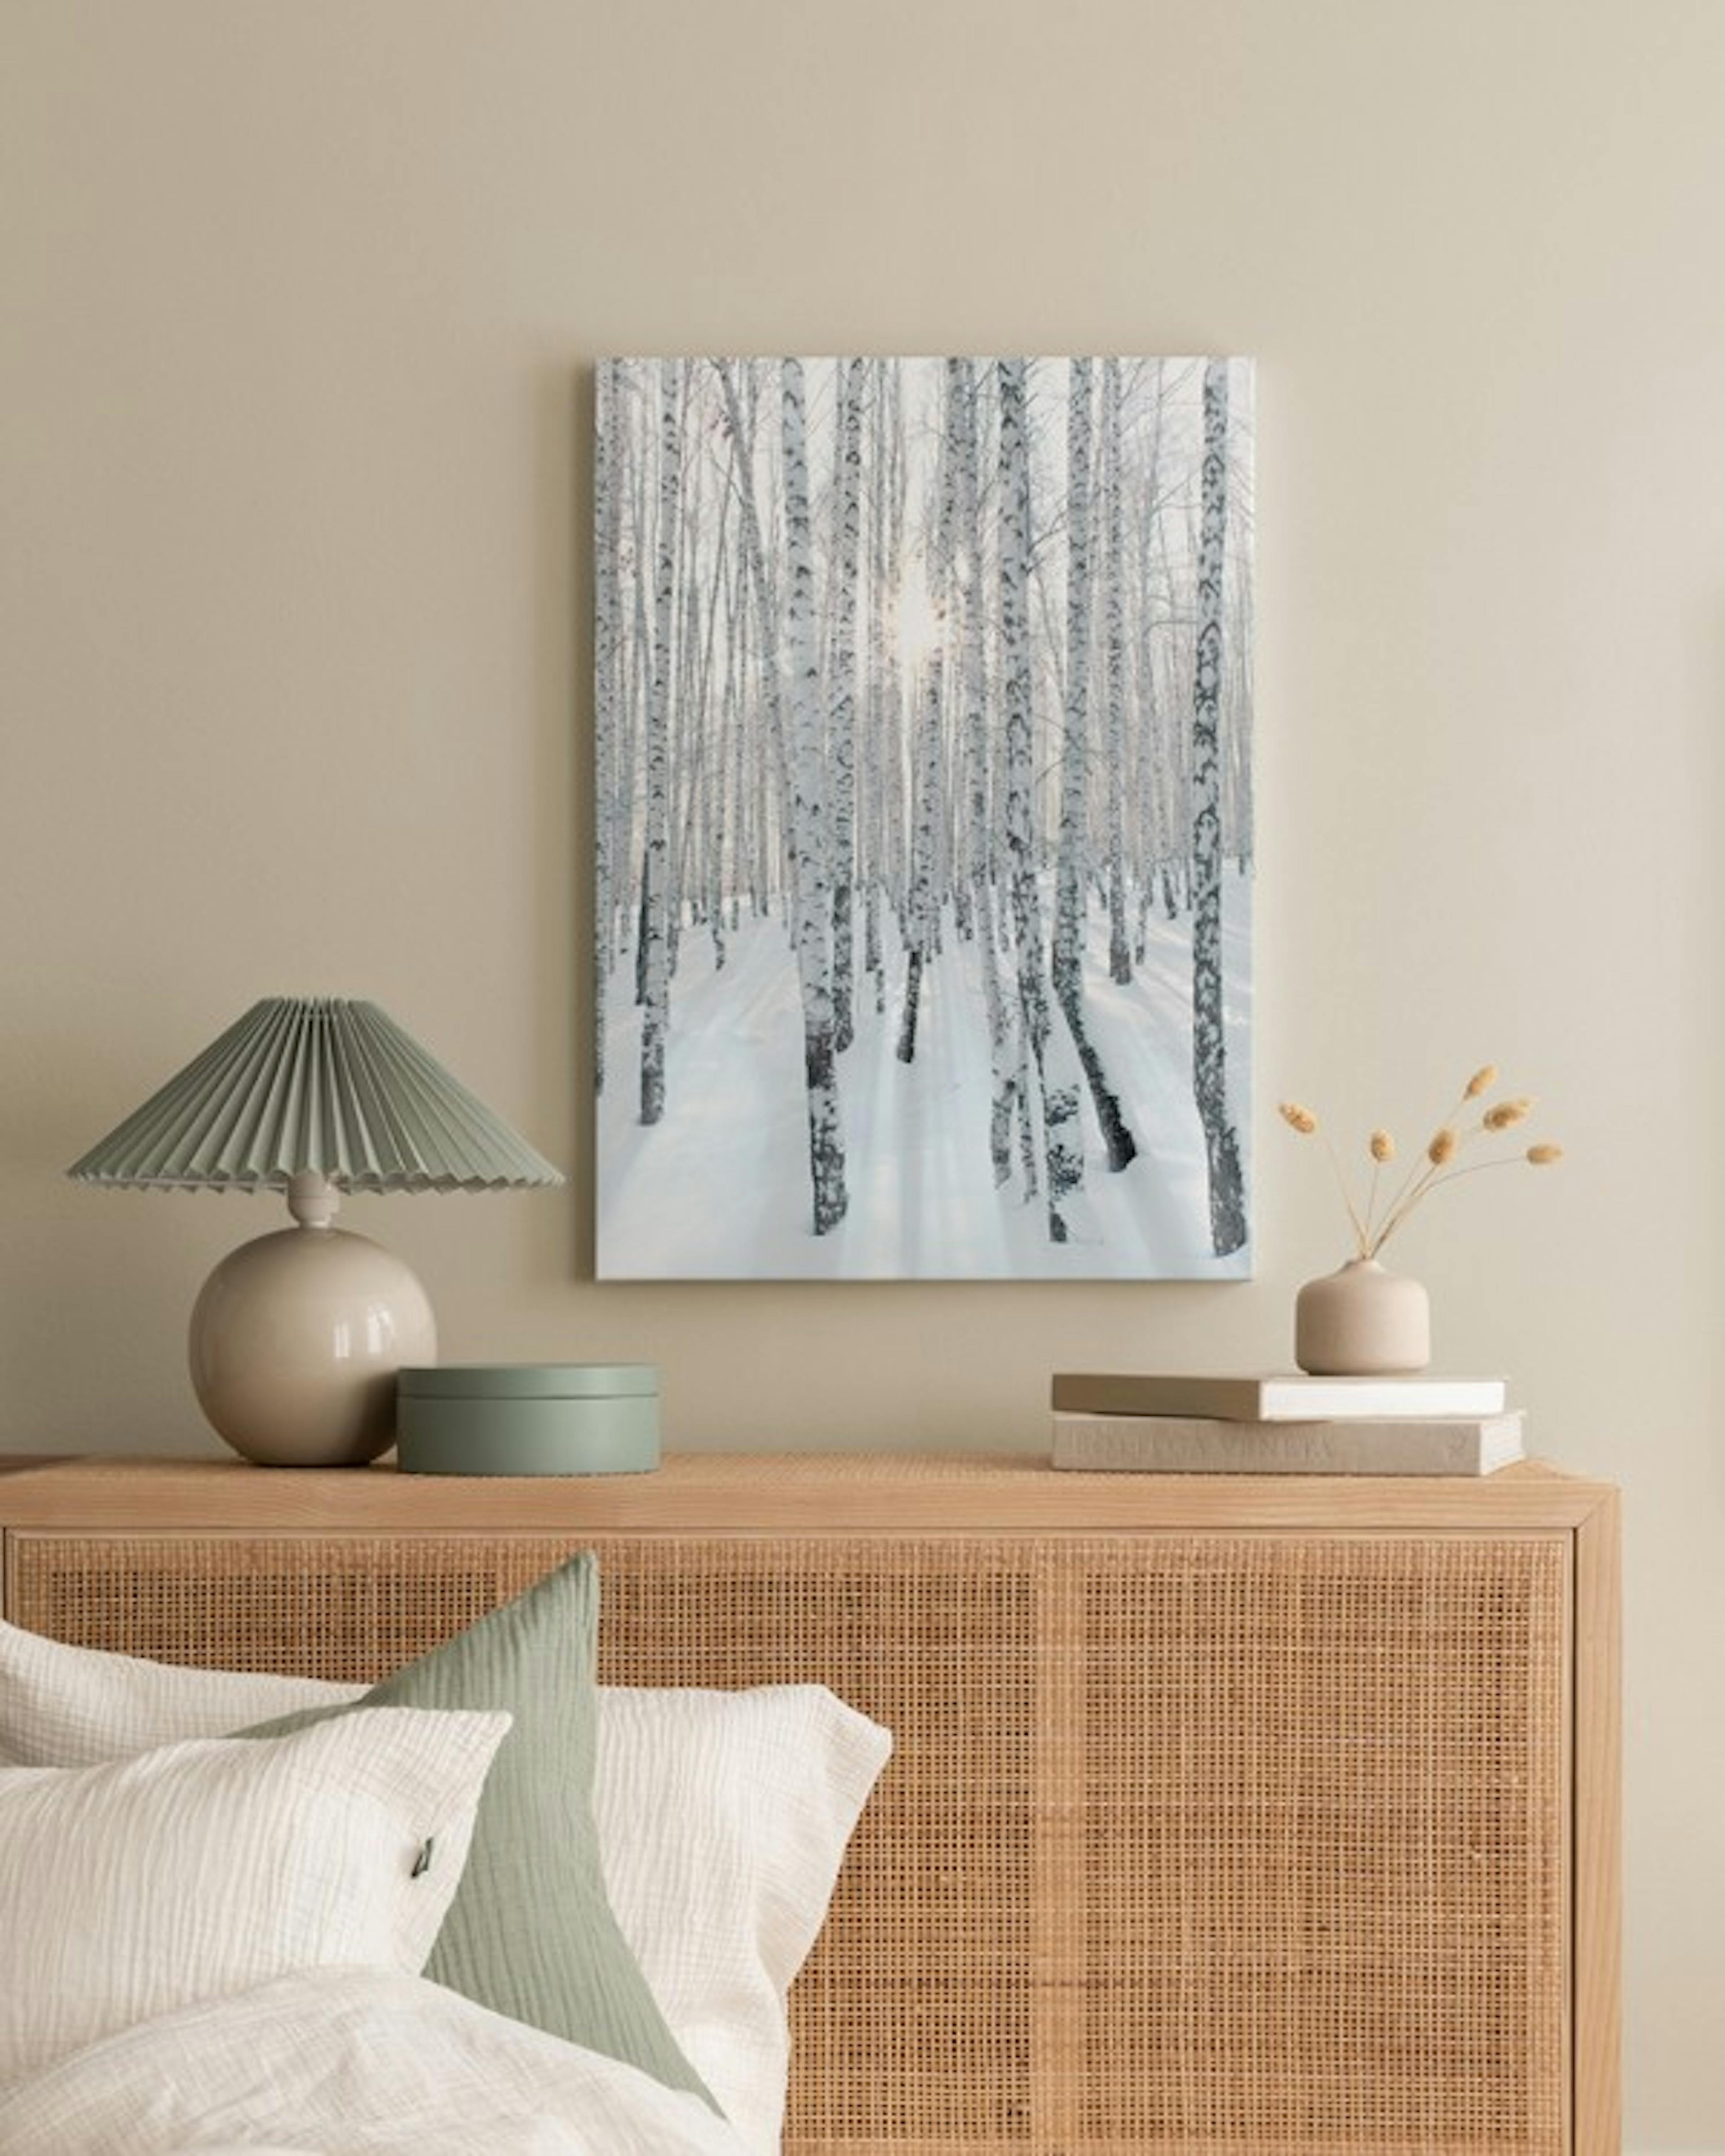 Snowy Birch Forest Canvas print thumbnail